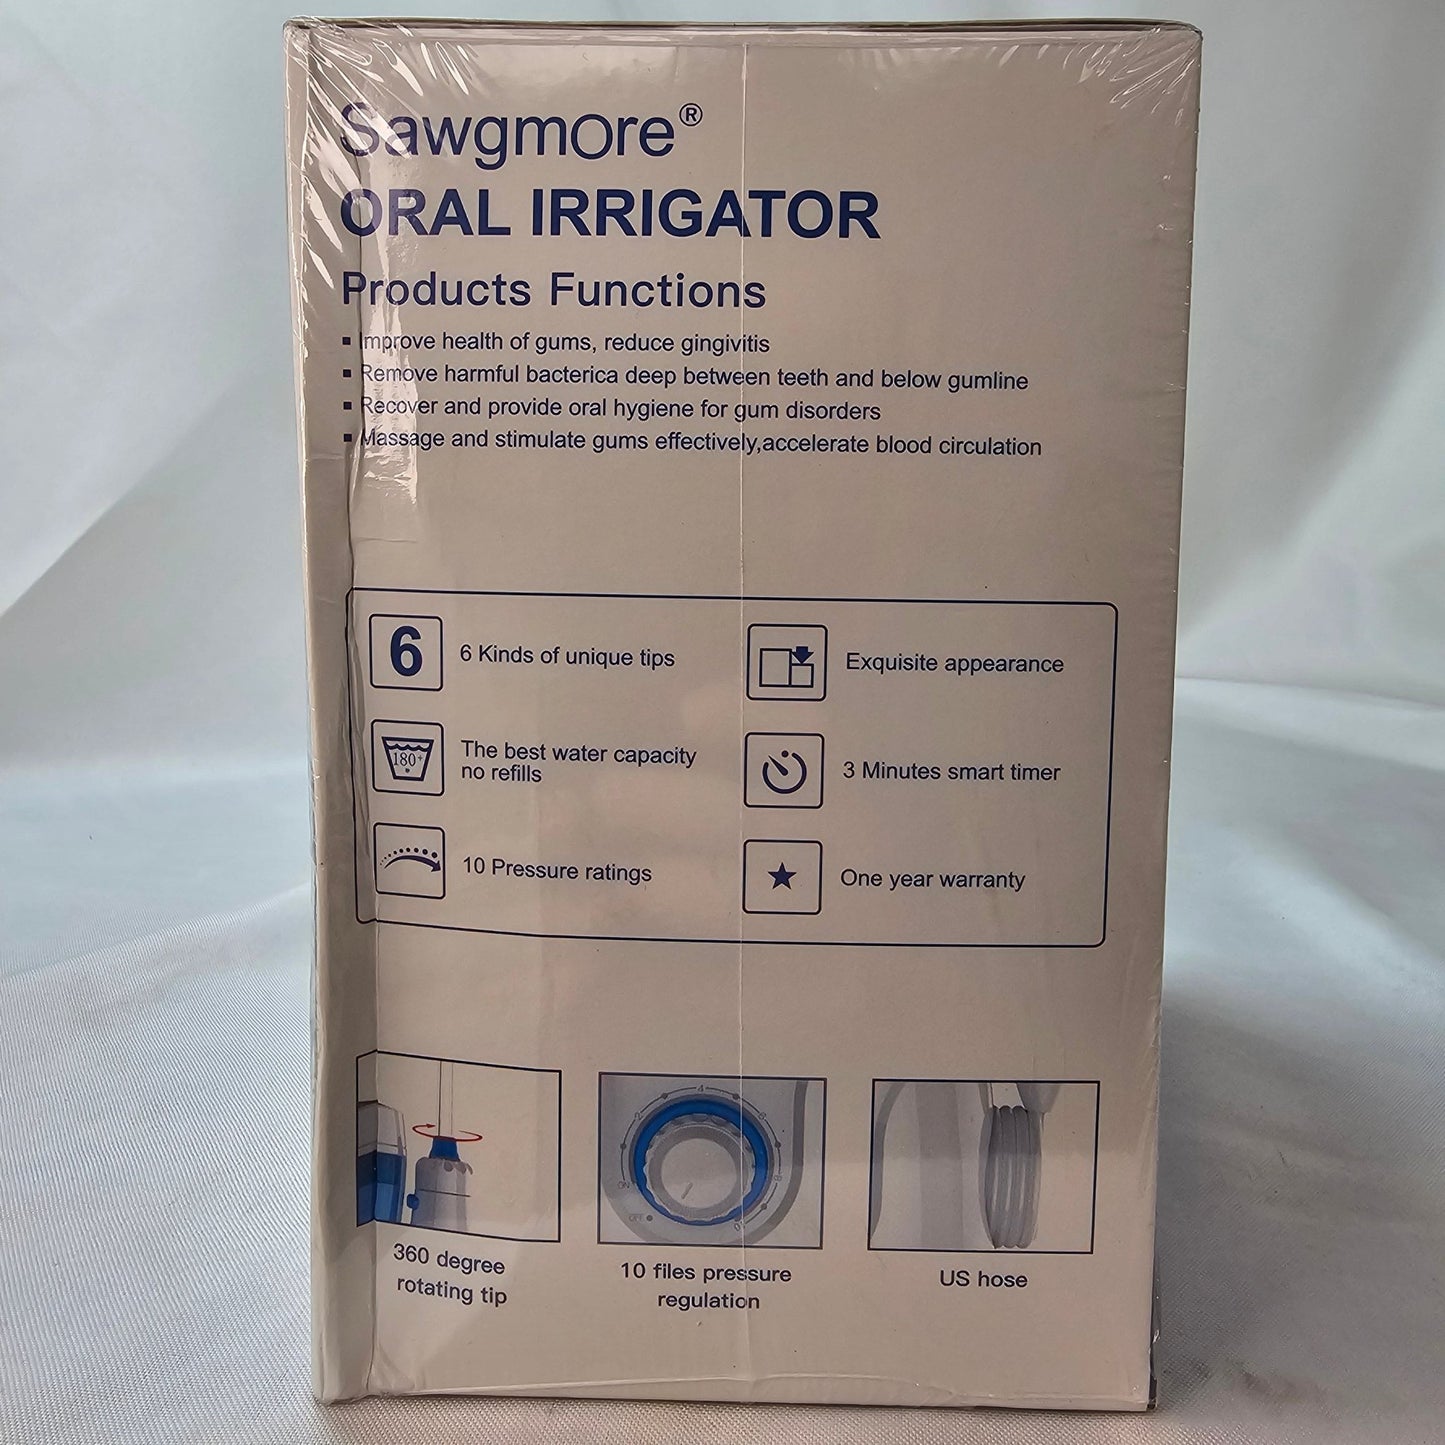 Oral Irrigator Sawgmore FC166 - DQ Distribution